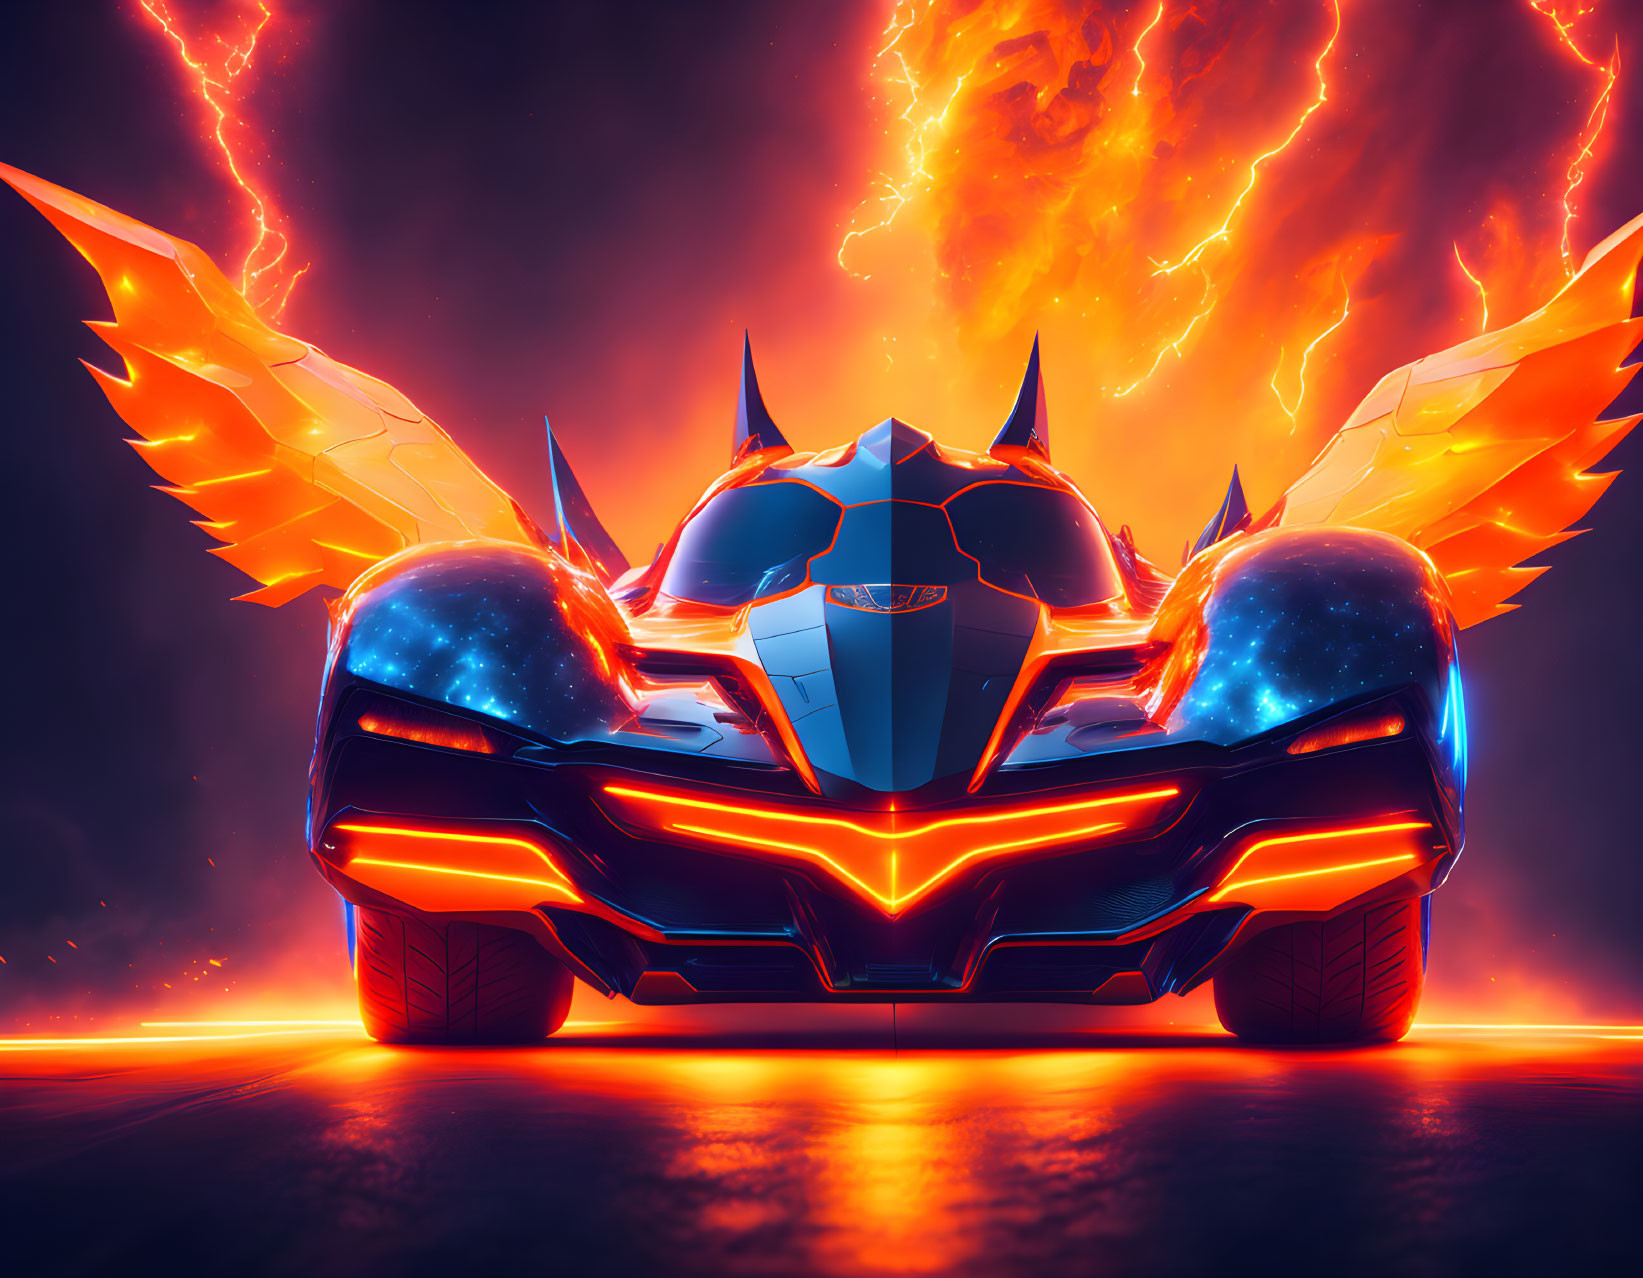 Batmobile: The Fire Rises